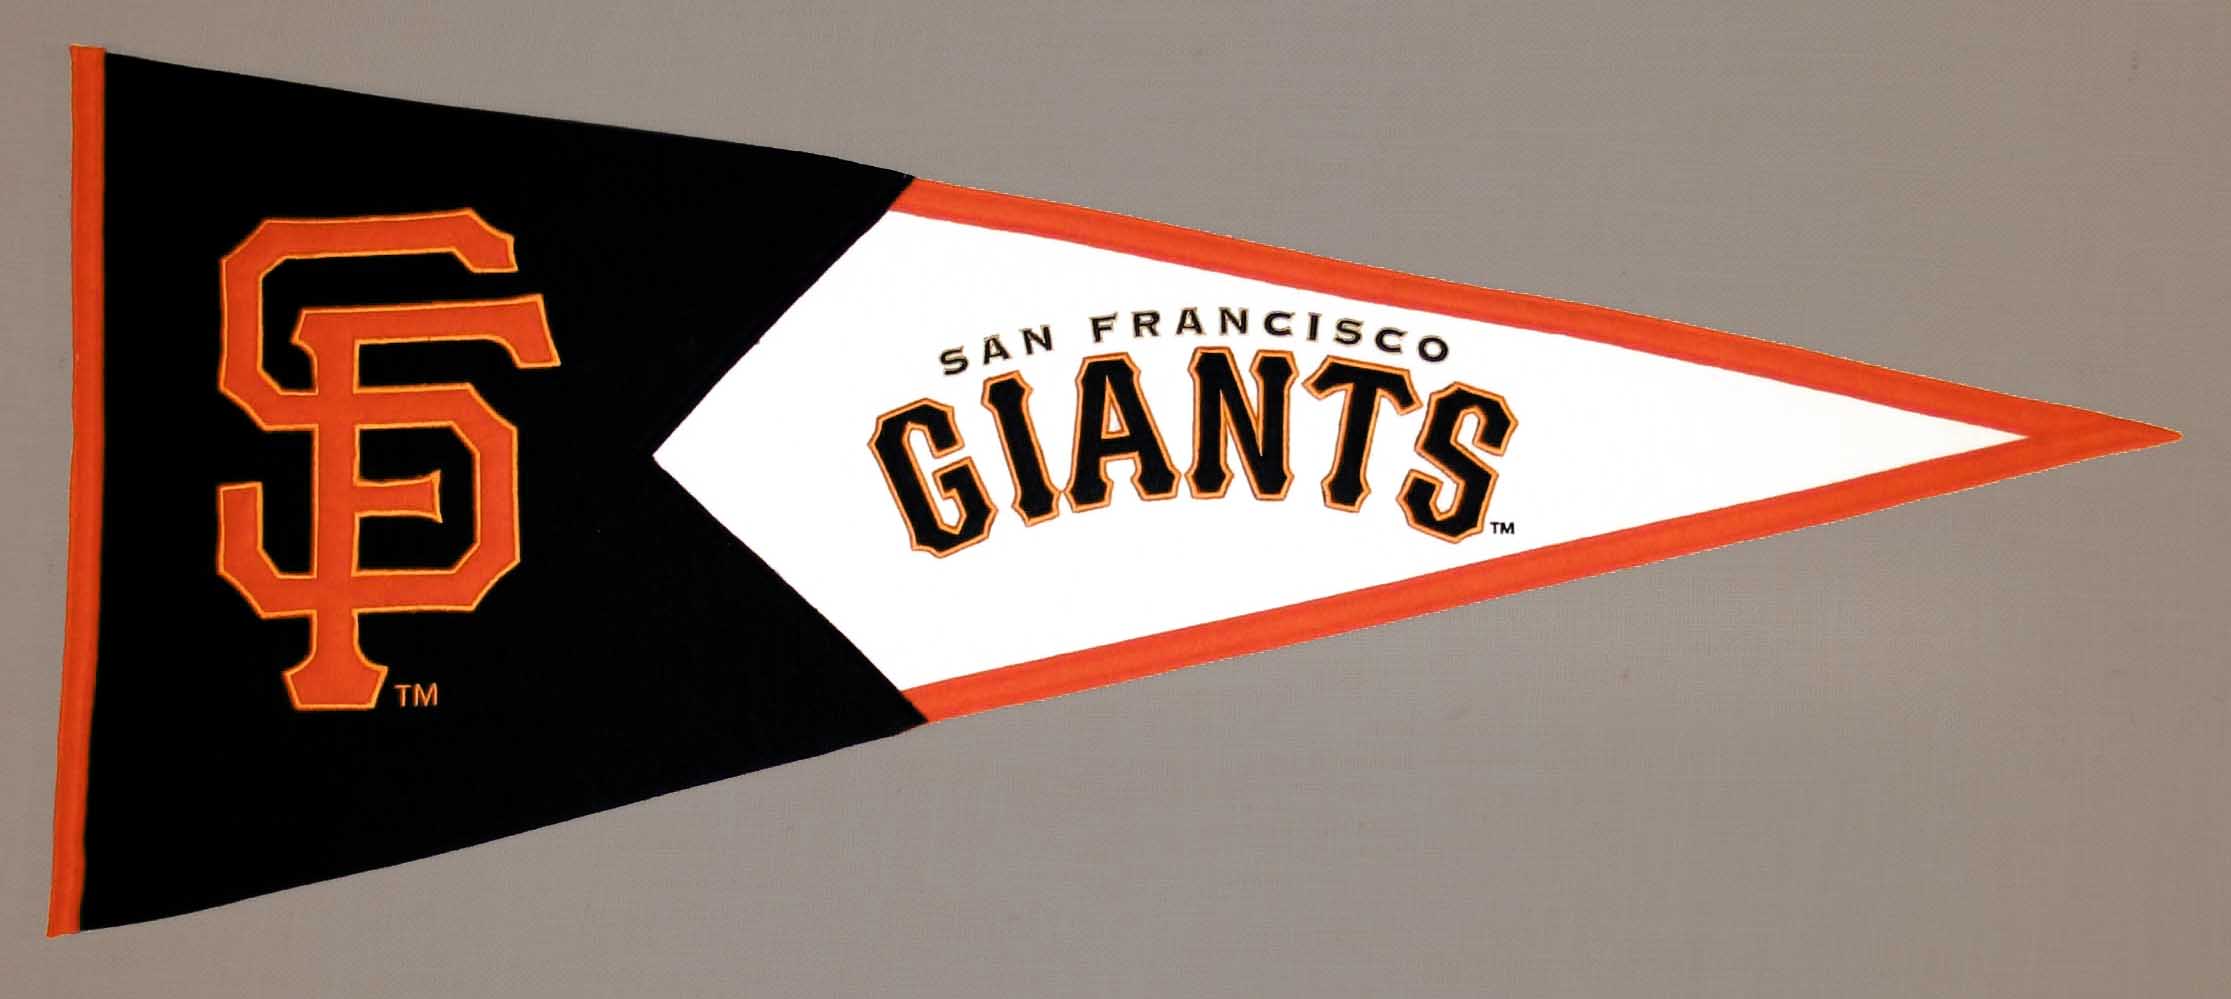 SAN FRANCISCO GIANTS mlb baseball (54) wallpaper | 2231x999 ...